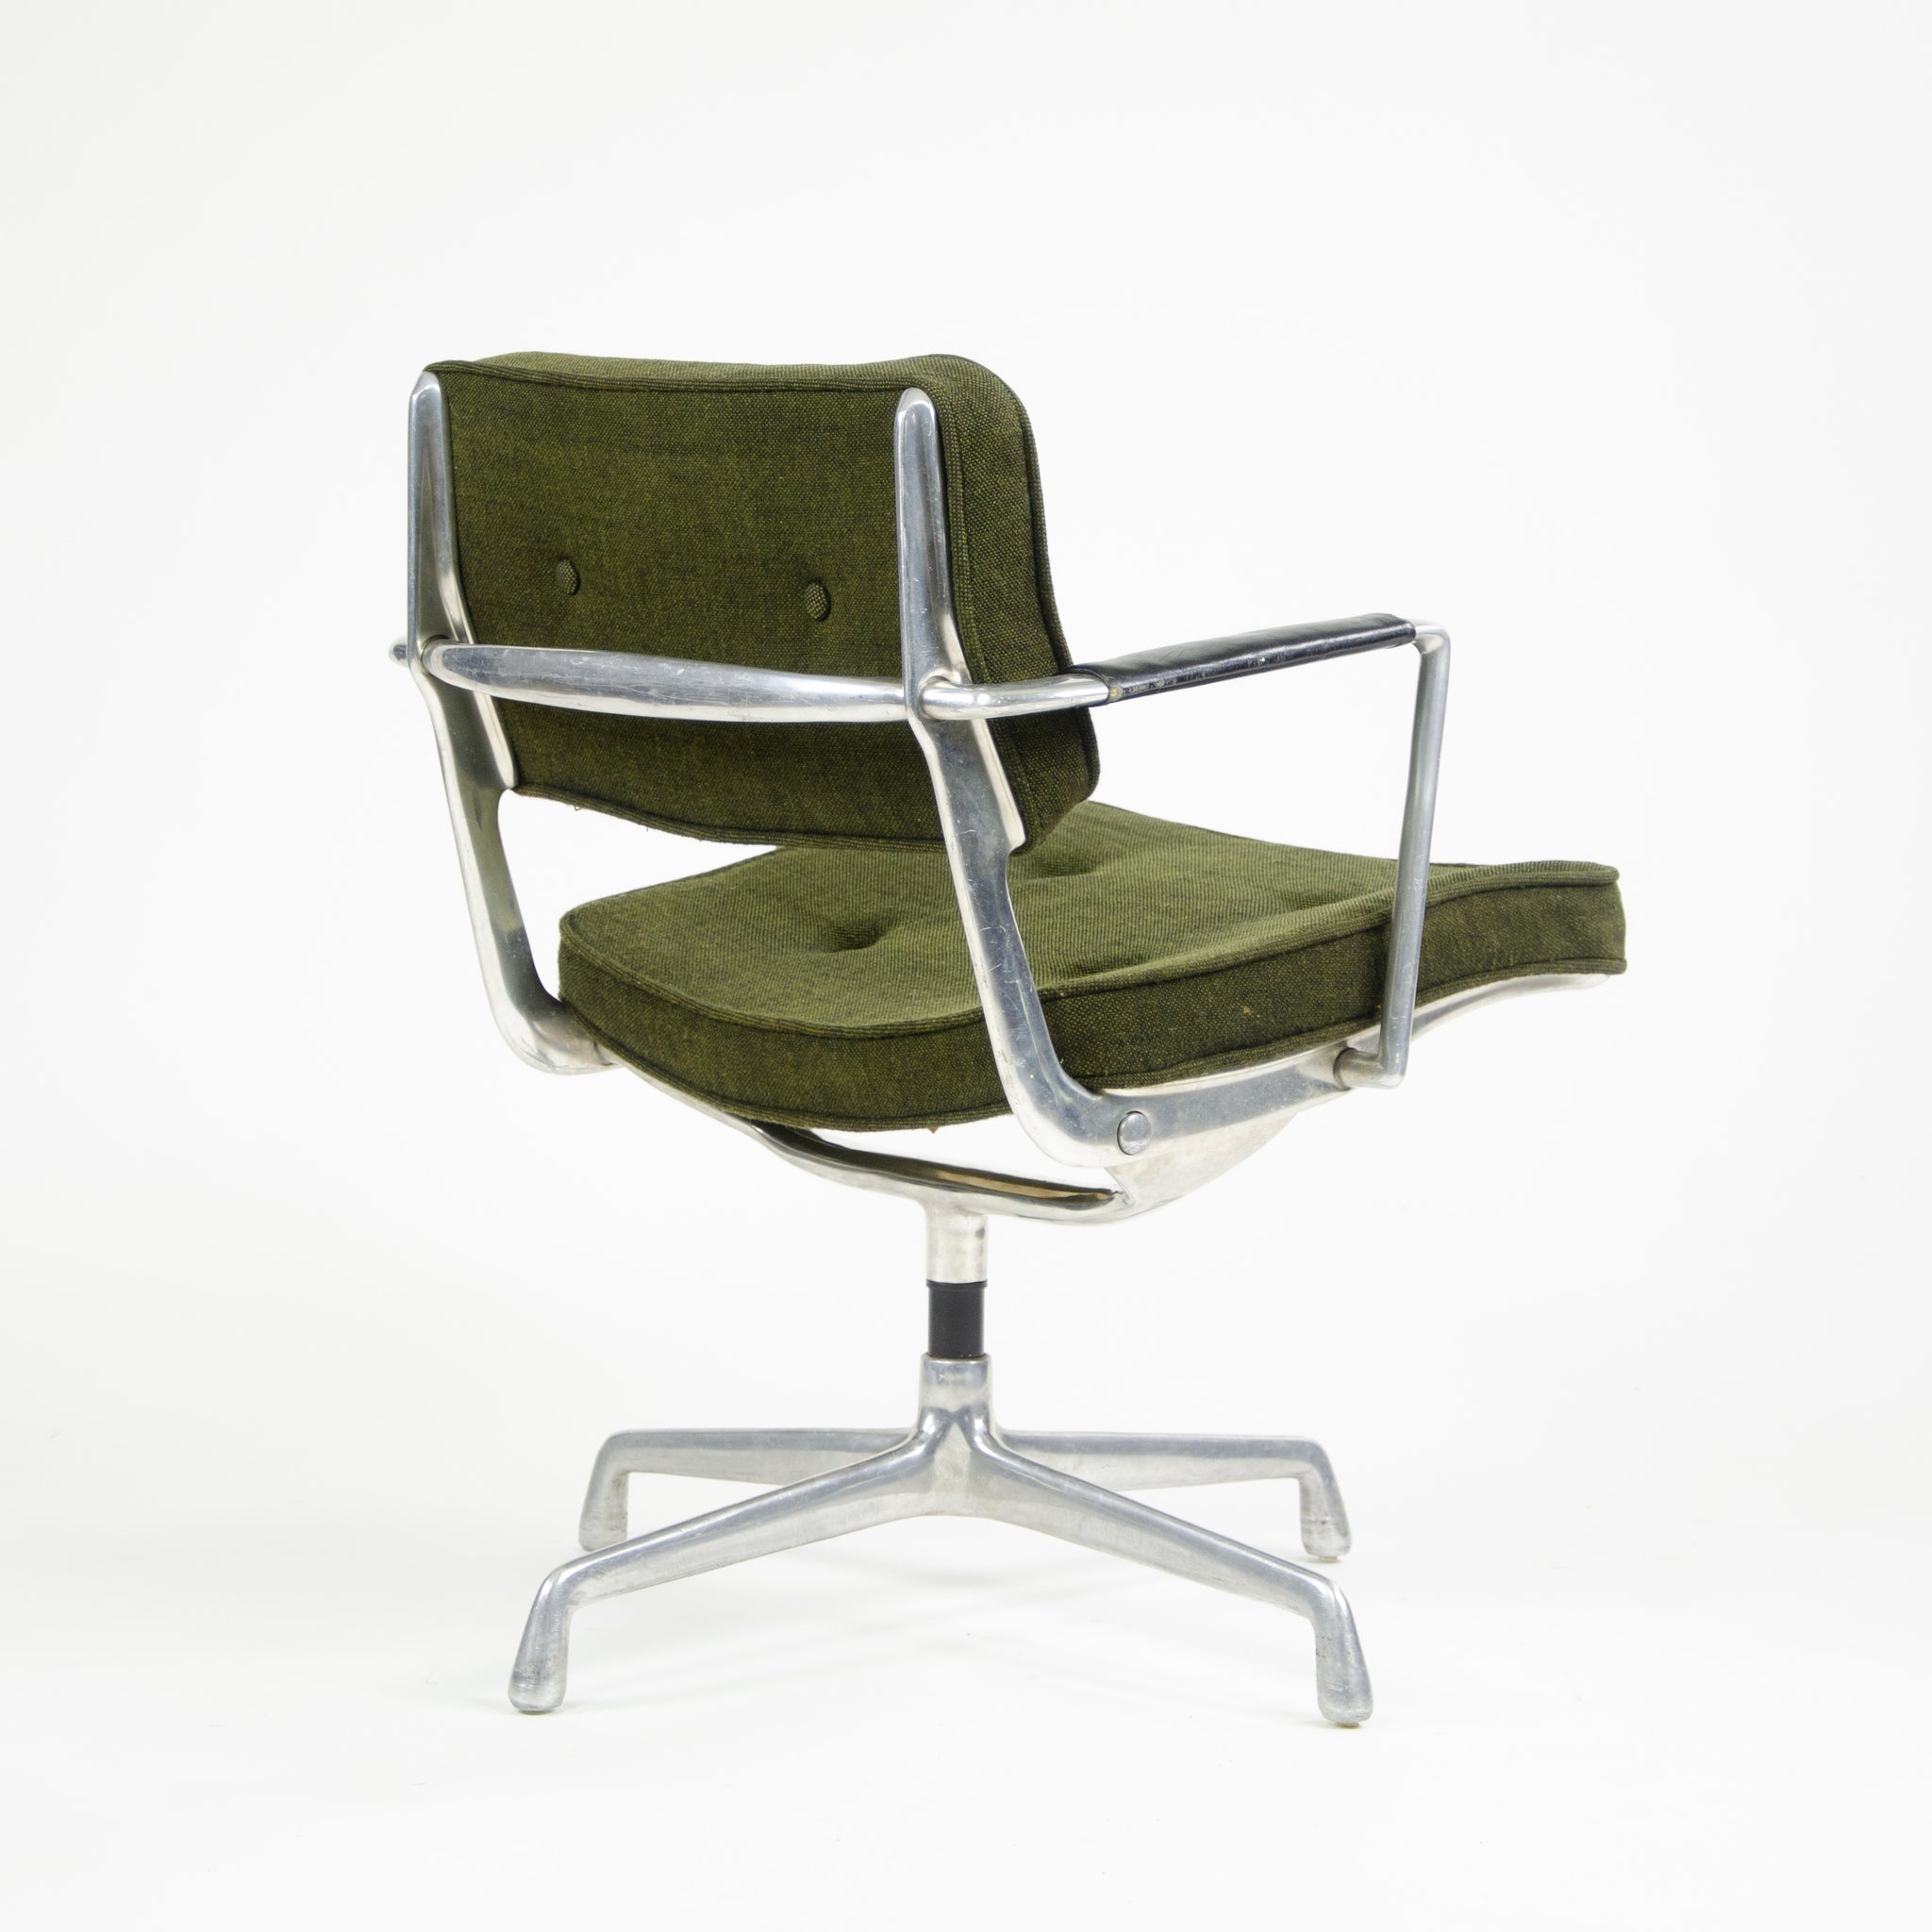 SOLD 1968 Eames Herman Miller Intermediate Aluminum Chair Girard Rare Museum Quality